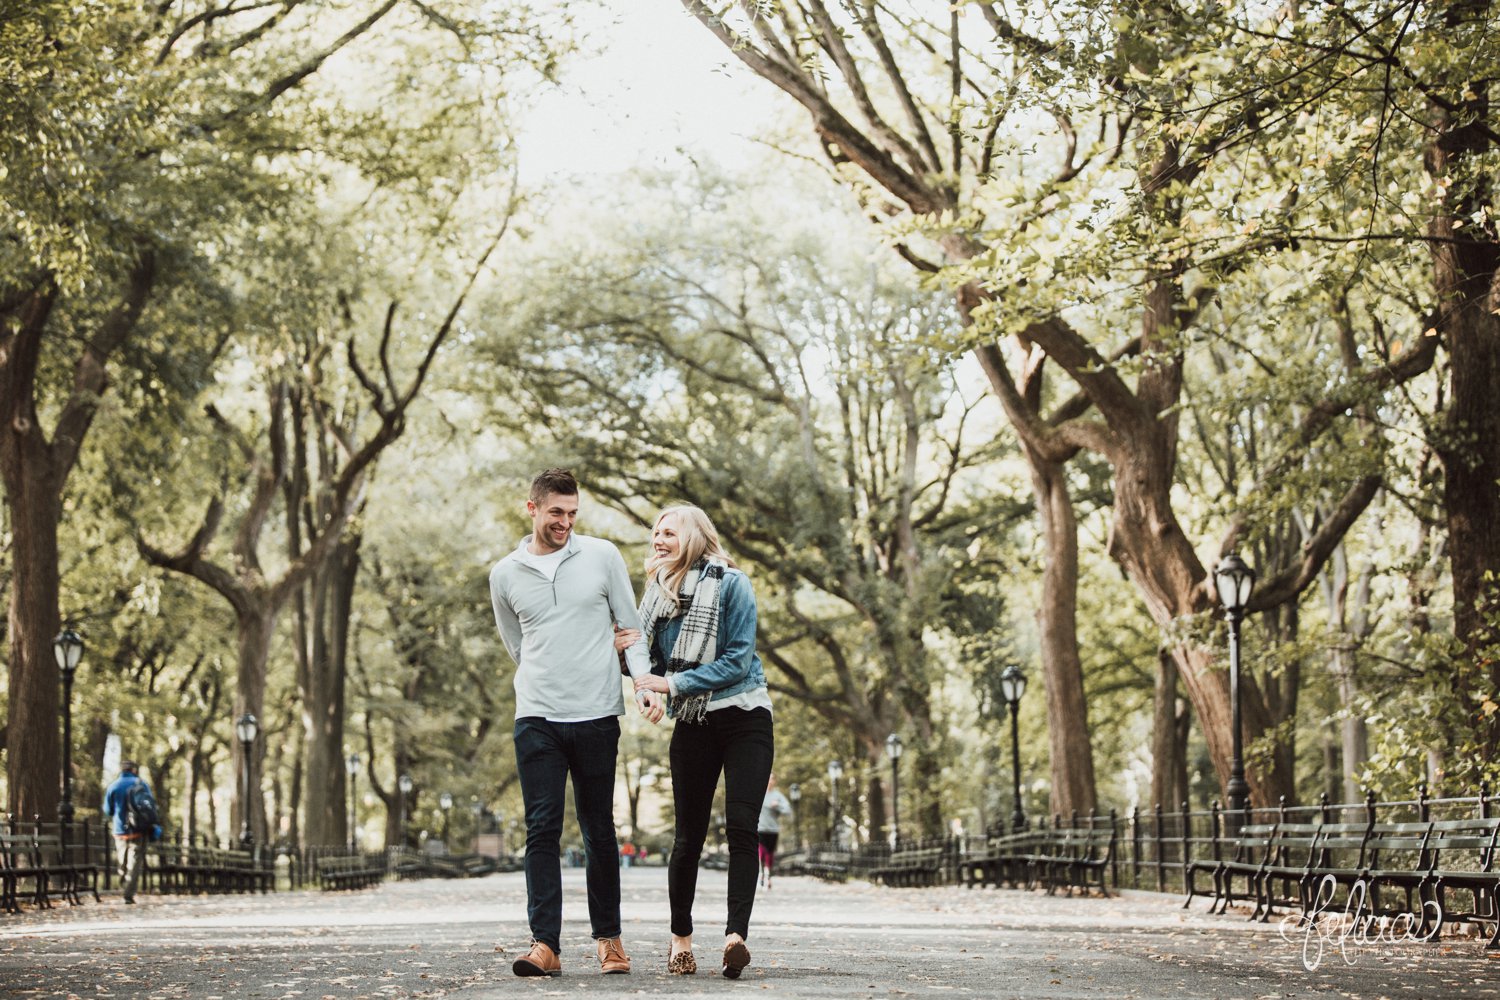 images by feliciathephotographer.com | destination wedding photographer | engagement | new york city | central park | casual | classic | true love | romantic | diamond ring | urban | joyful | cheetah shoes | scarf | sweet | trees | 